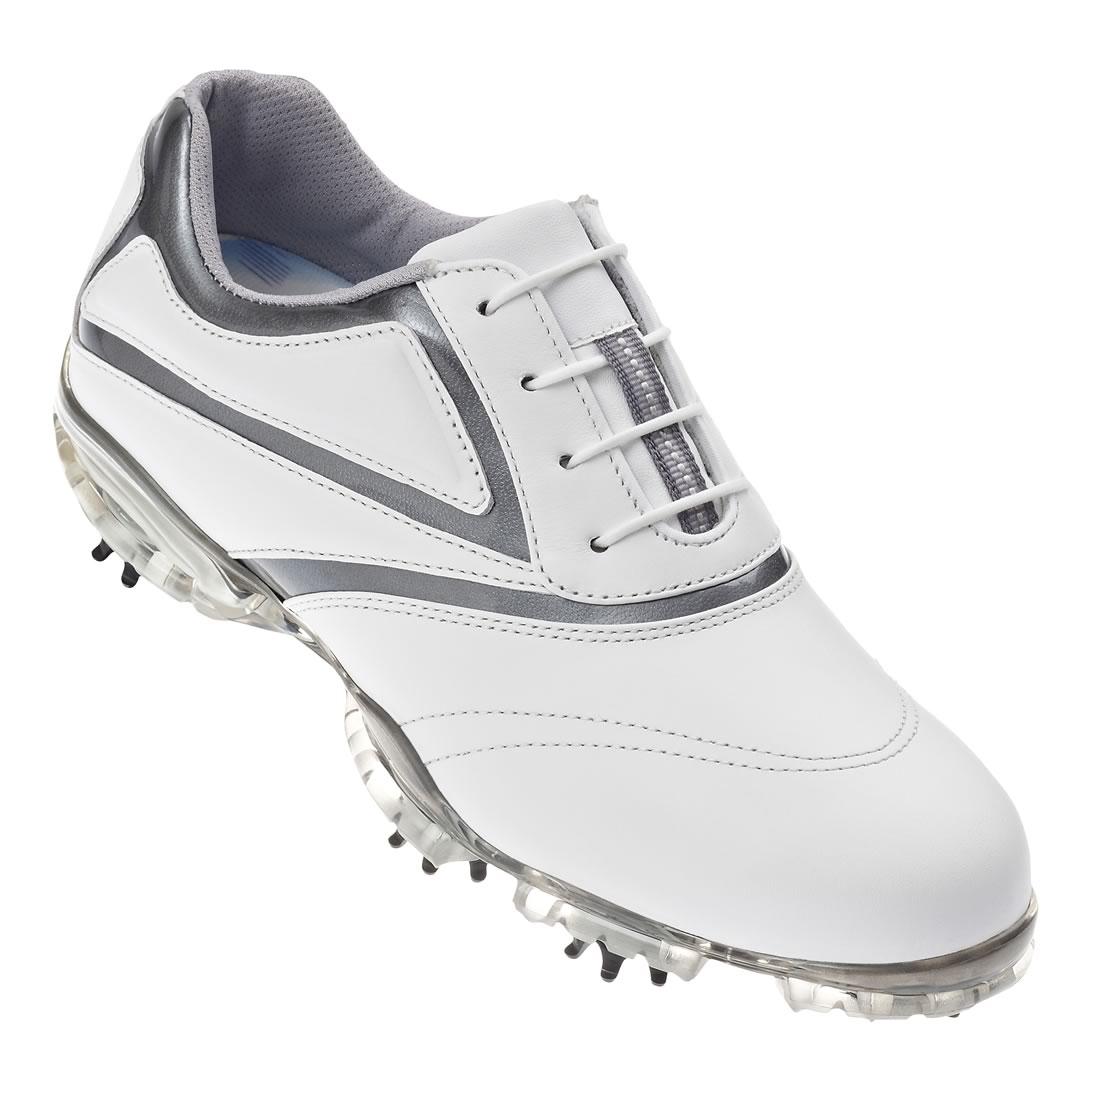 FootJoy Ladies Sport Golf Shoes White/Silver